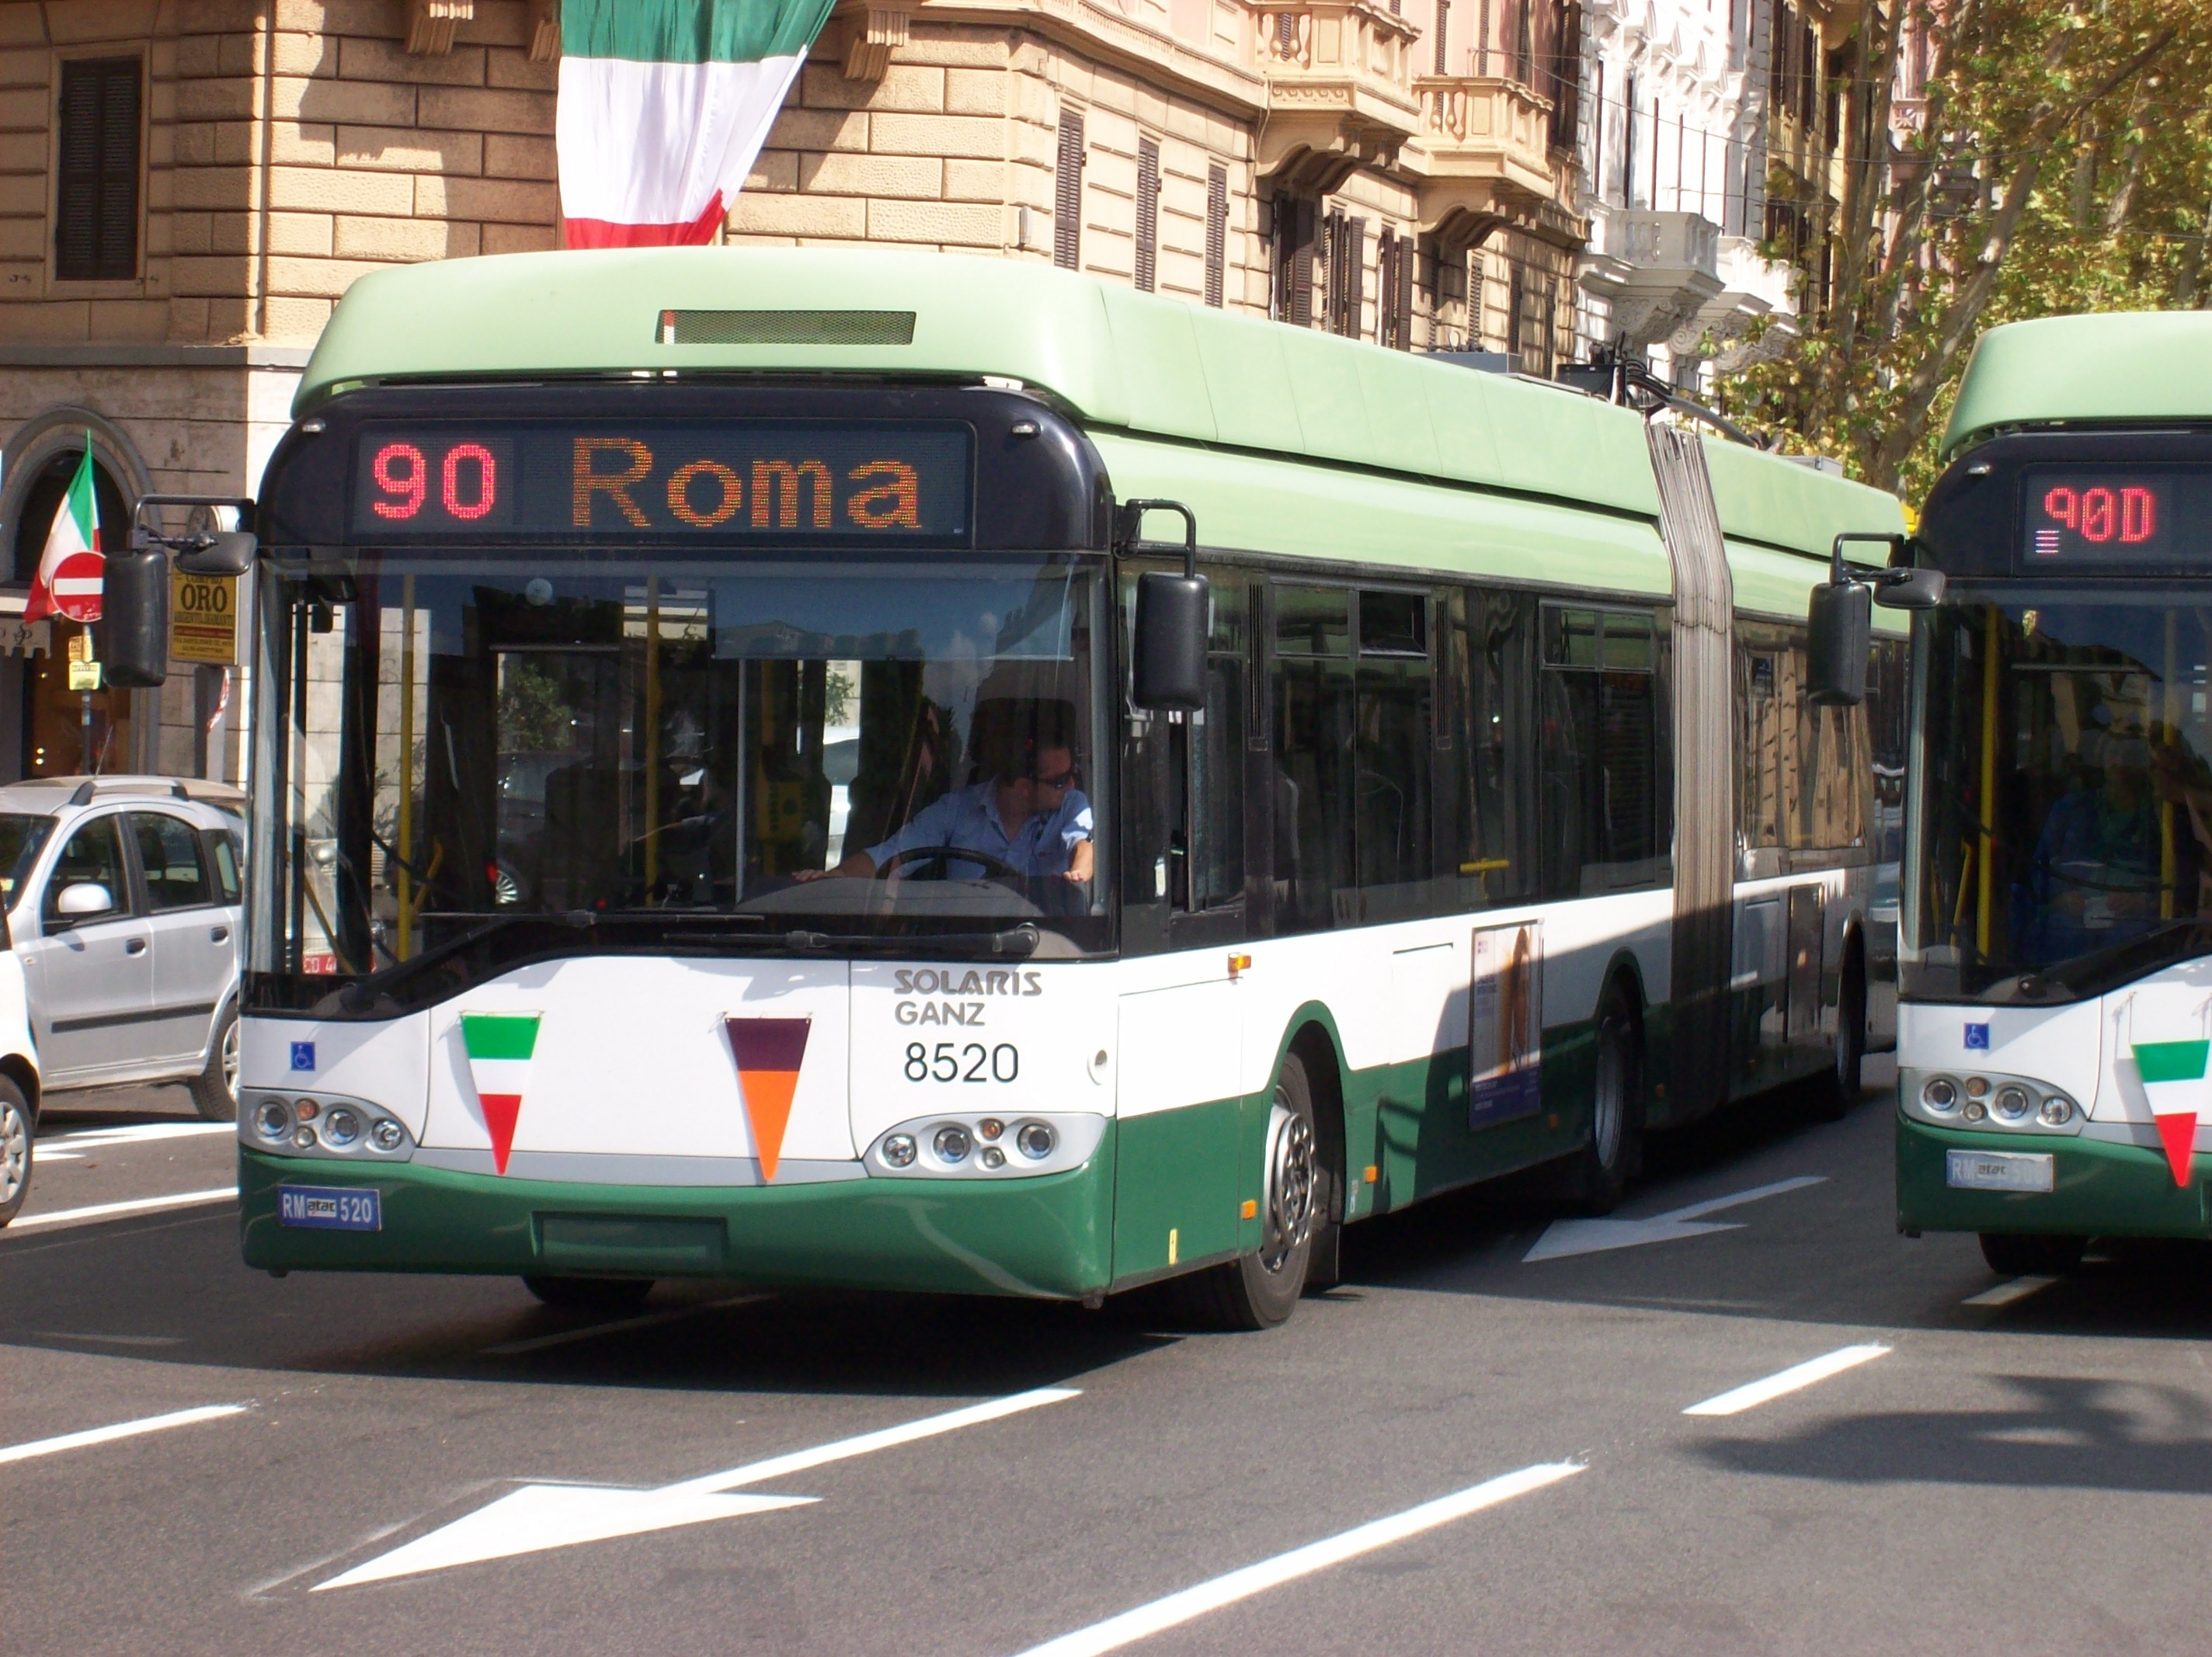 Dossier: 2010-09-19 Solaris Ganz Trollino ATAC 8520 Linea 90 Roma.jpg...